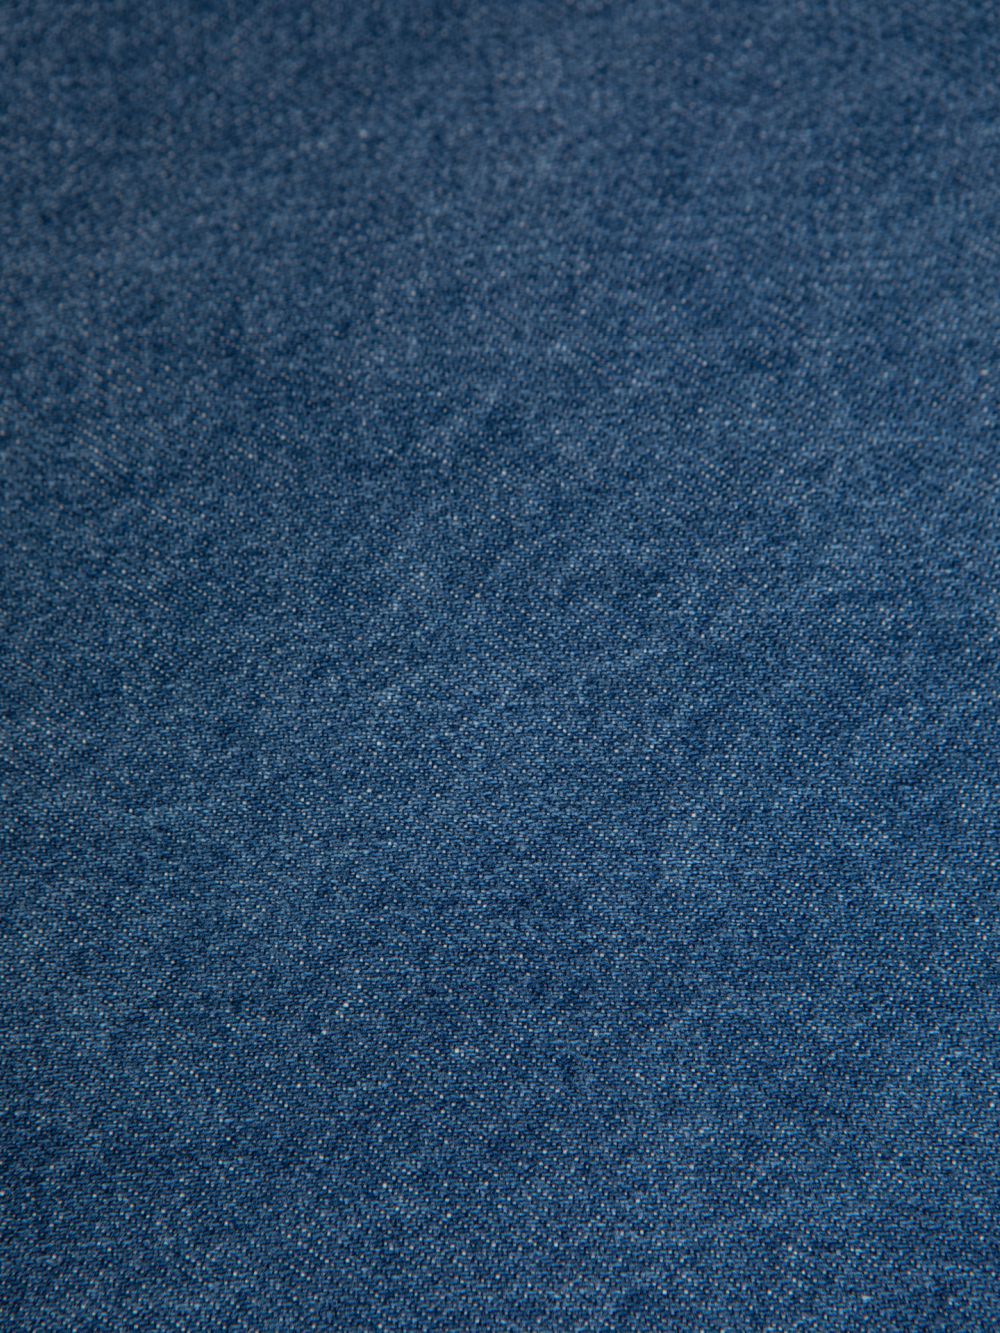 כיסוי כרית ג’ינס עם ריצ’רץ בגודל 60X80 ס”מ